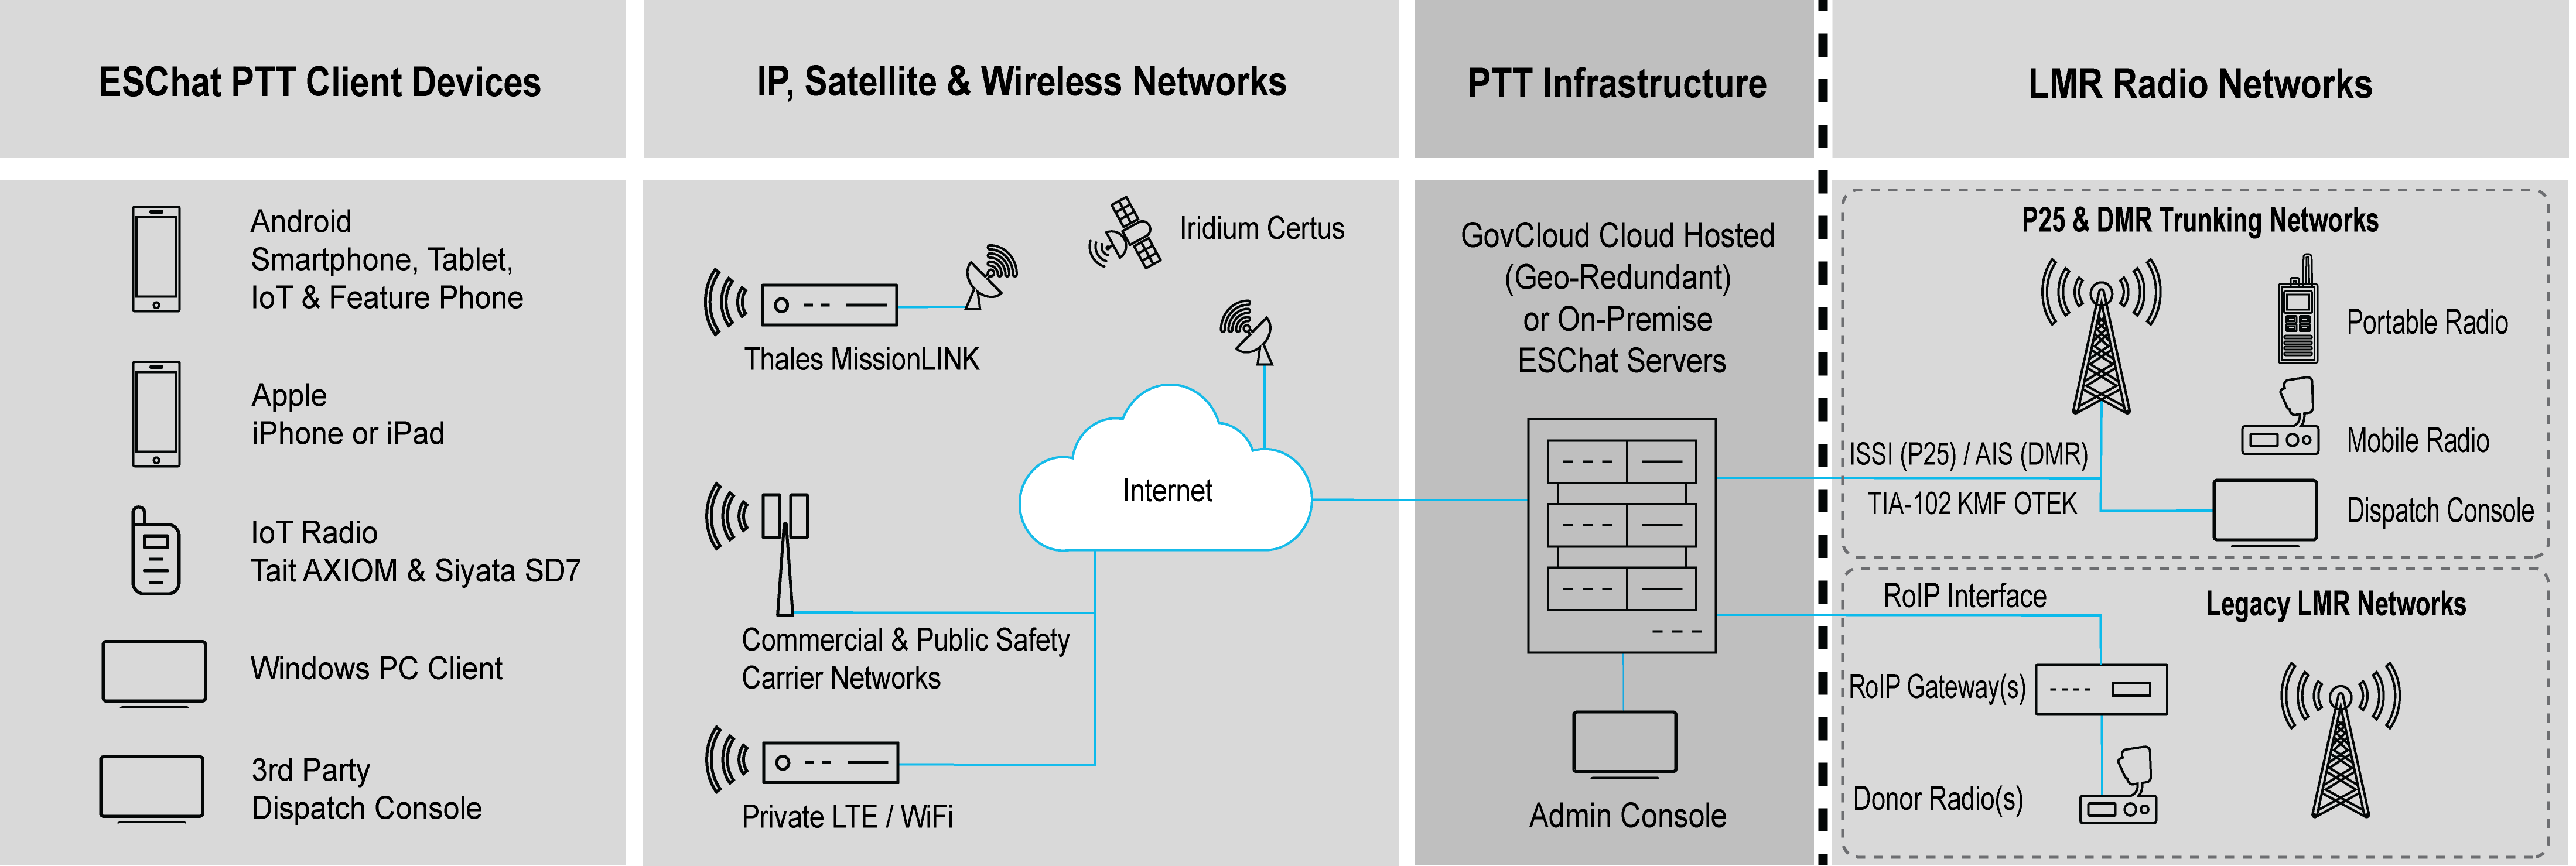 ESChat Network Diagram